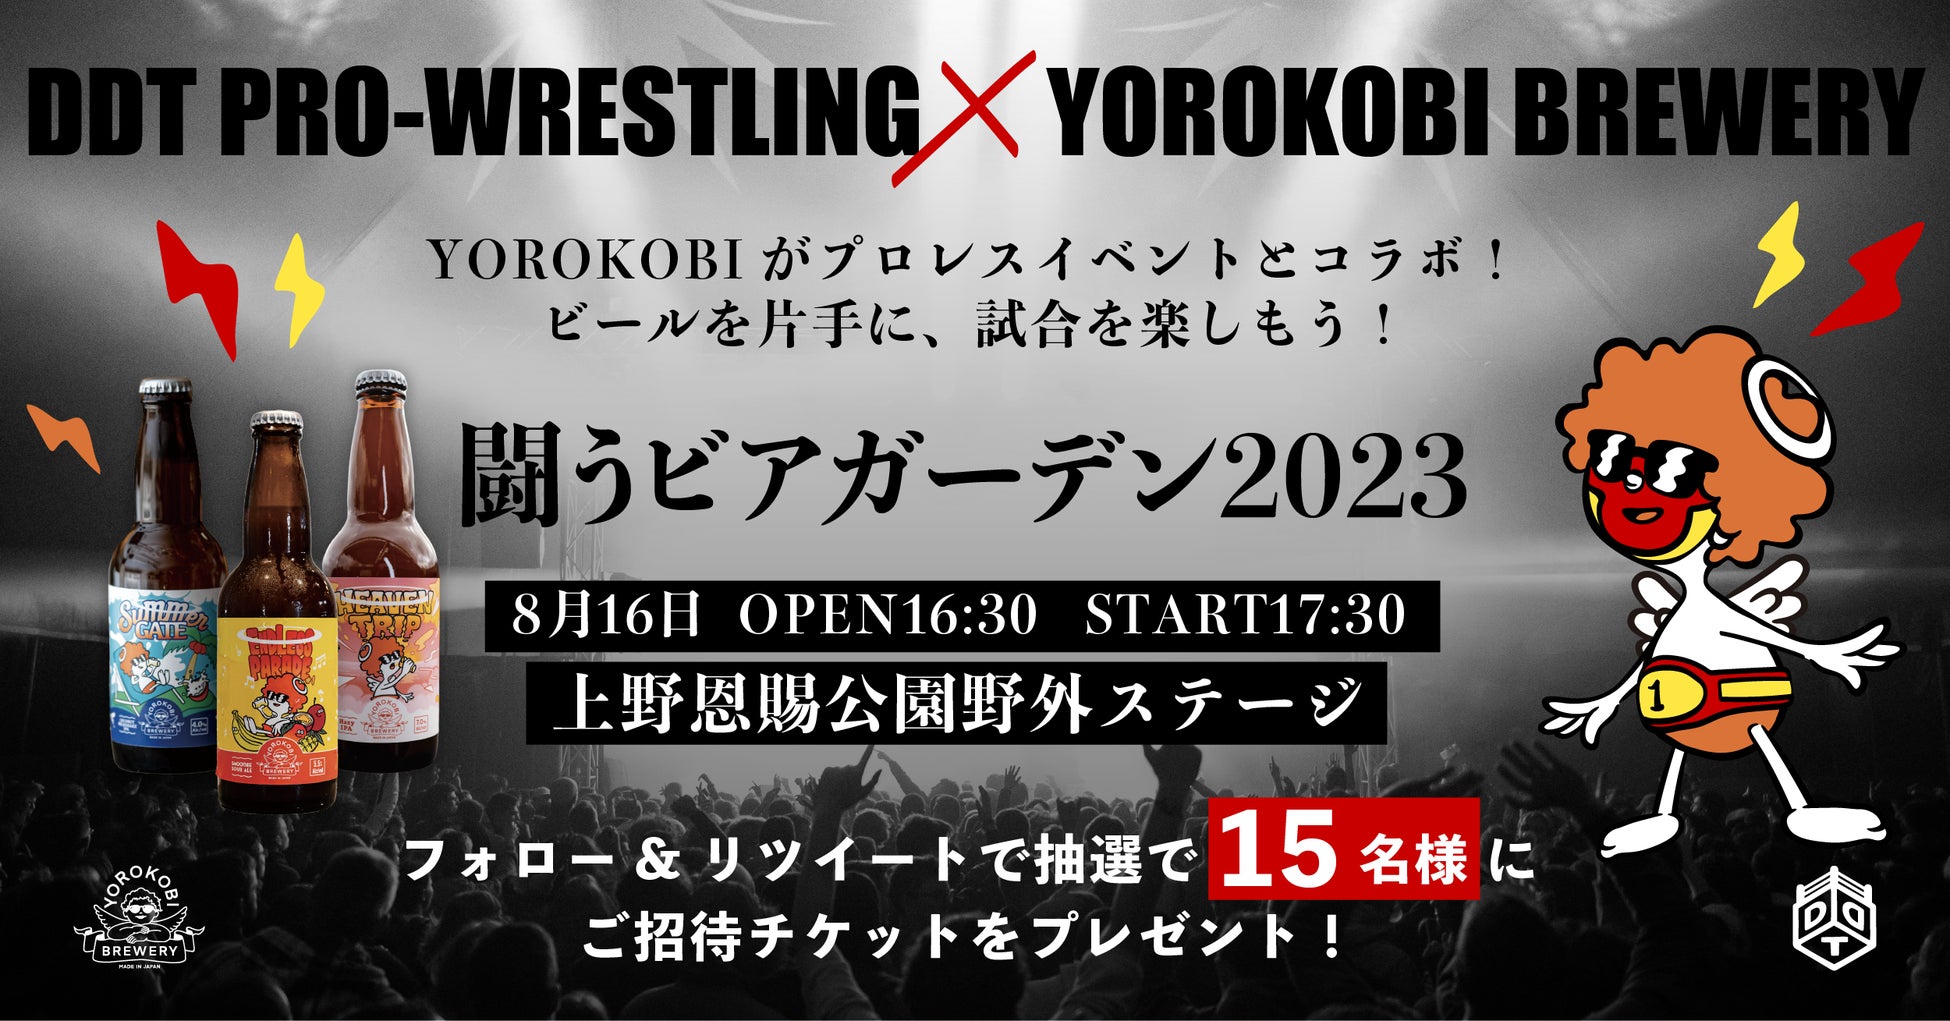 DDTプロレスリングの『闘うビアガーデン2023』にYOROKOBI BREWERYのスポンサードが決定のサブ画像1